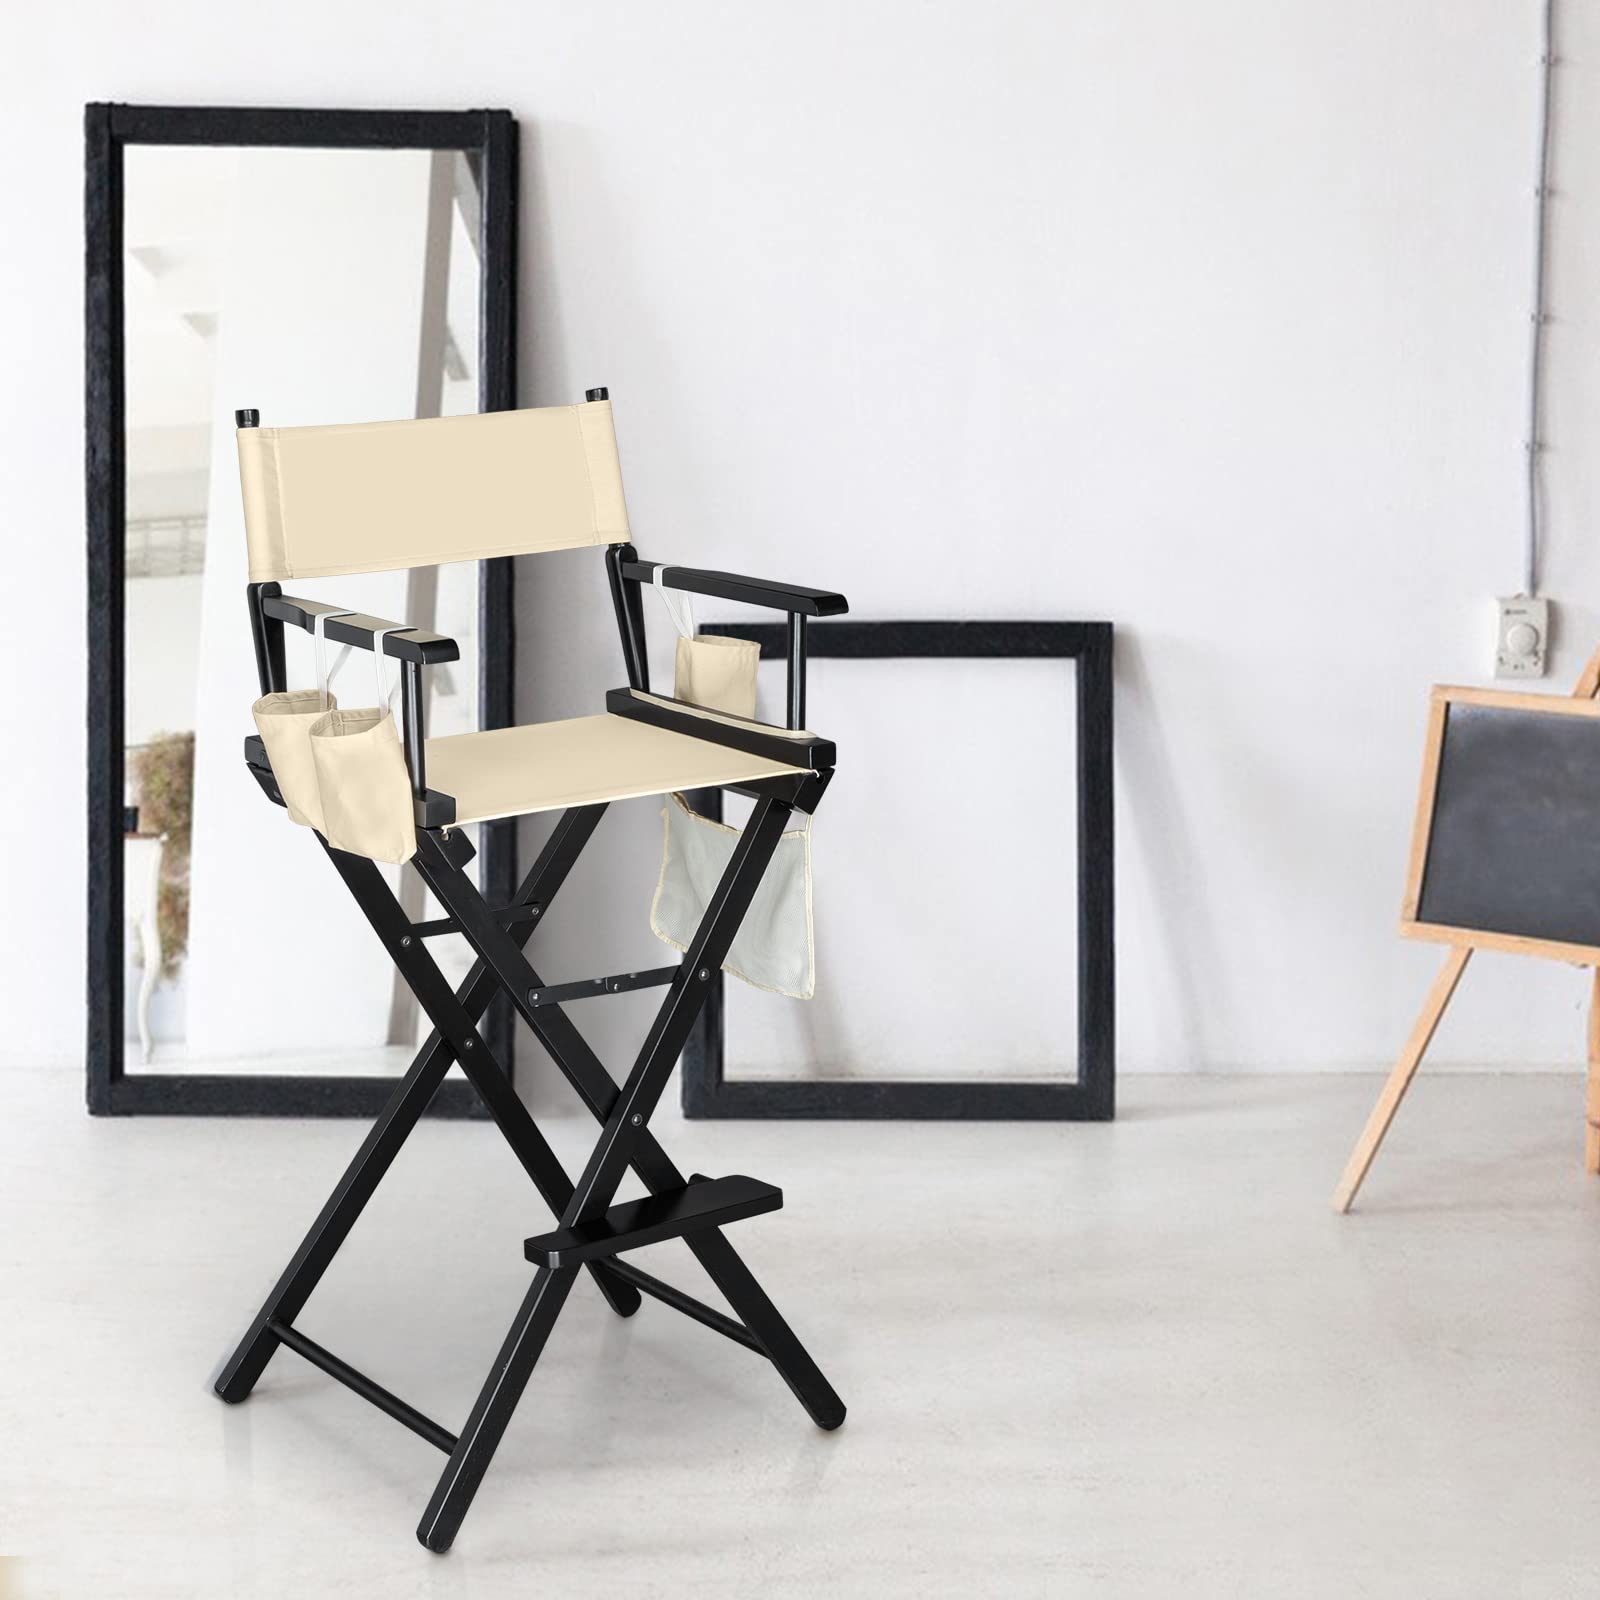 Omysalon 31in Director's Chair Folding Artist Makeup Chair